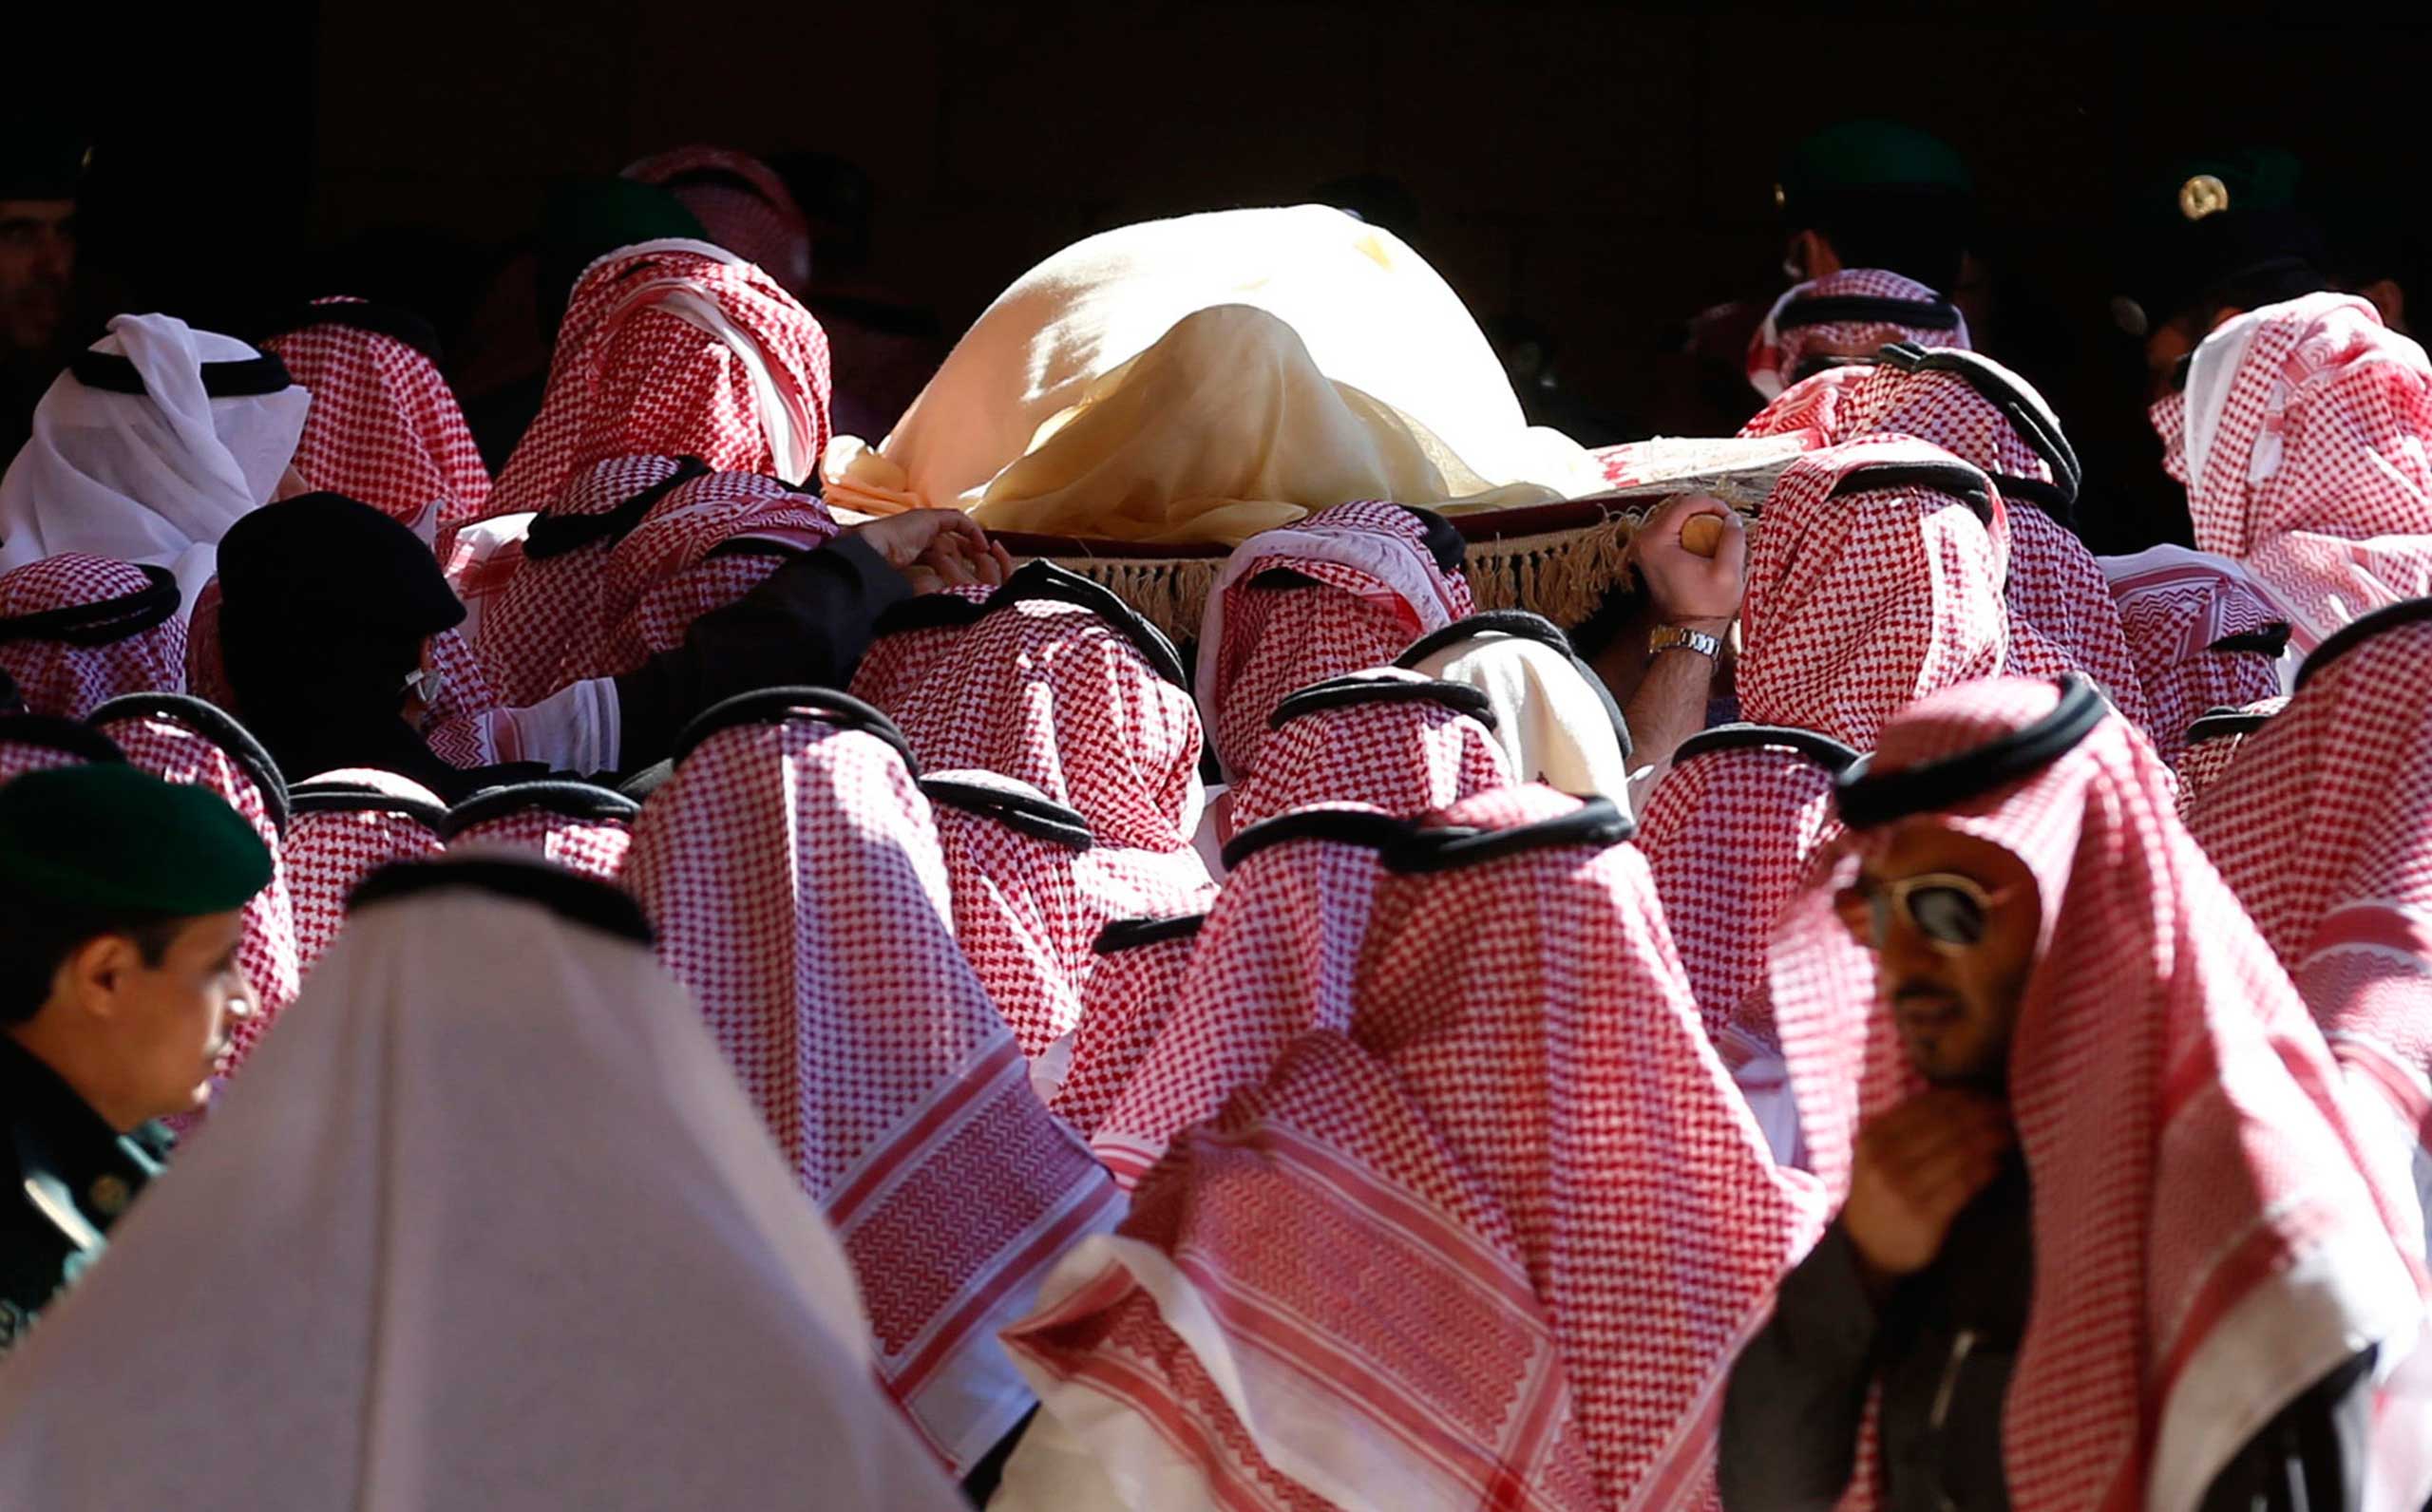 The body of Saudi King Abdullah bin Abdul Aziz is carried during his funeral at Imam Turki Bin Abdullah Grand Mosque, in Riyadh, Jan. 23, 2015. (Faisal al Nasser—Reuters)